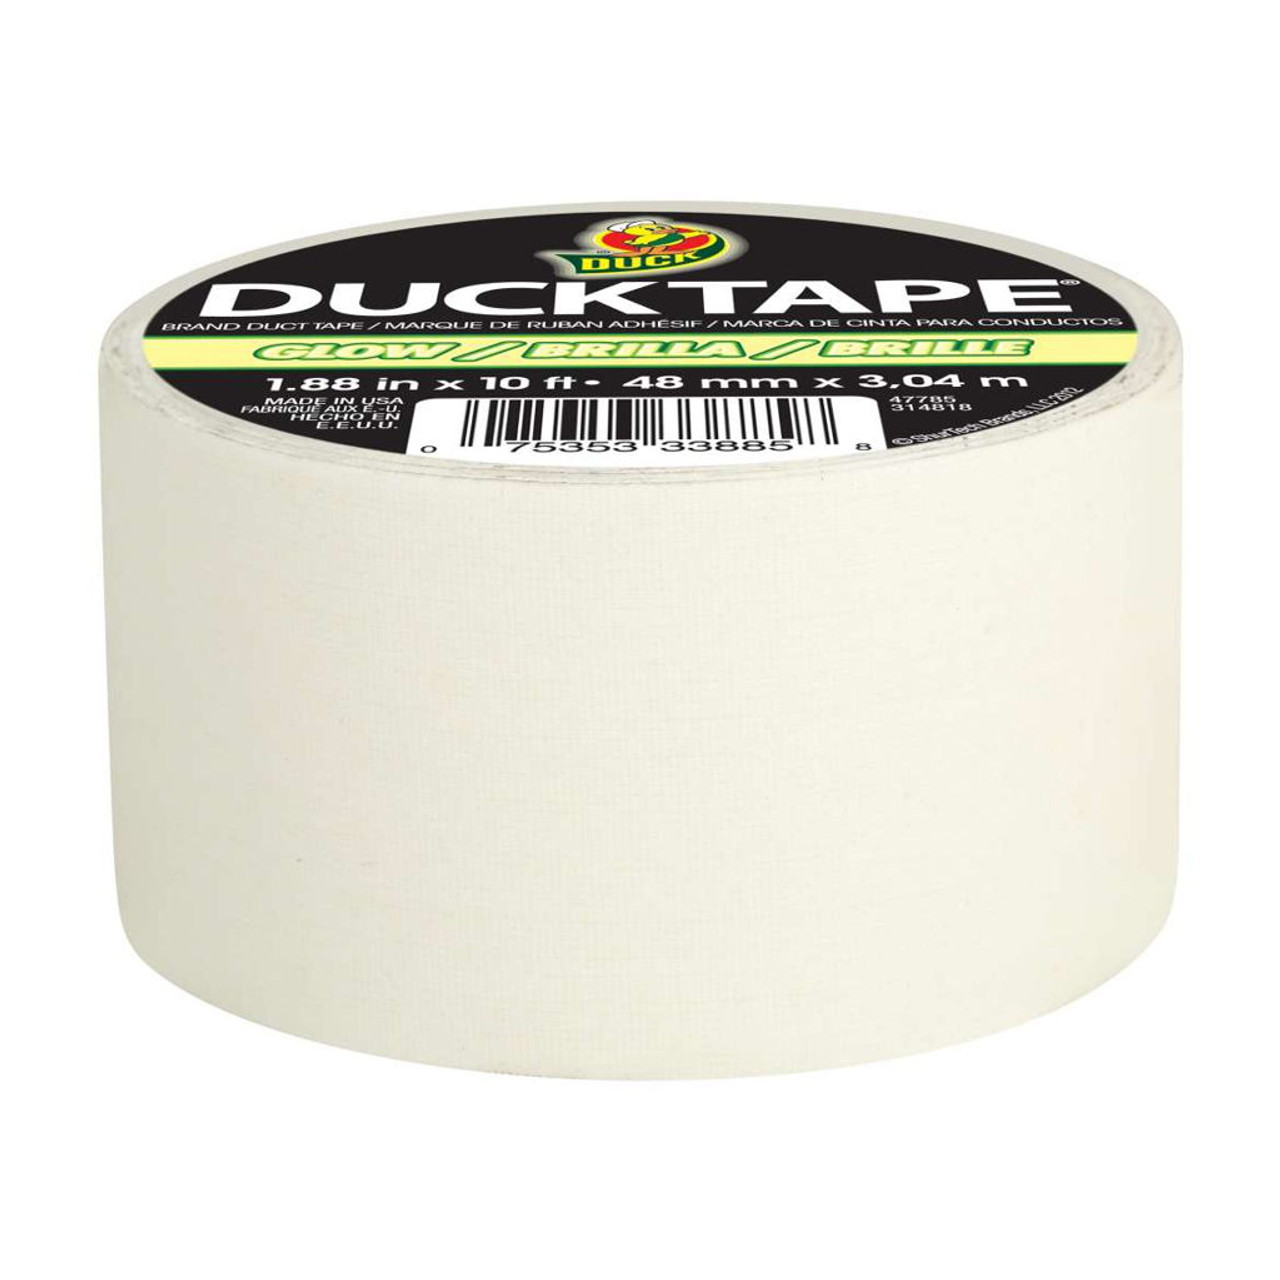 Piggy DuckTape  Duck tape, Duck tape crafts, Duct tape